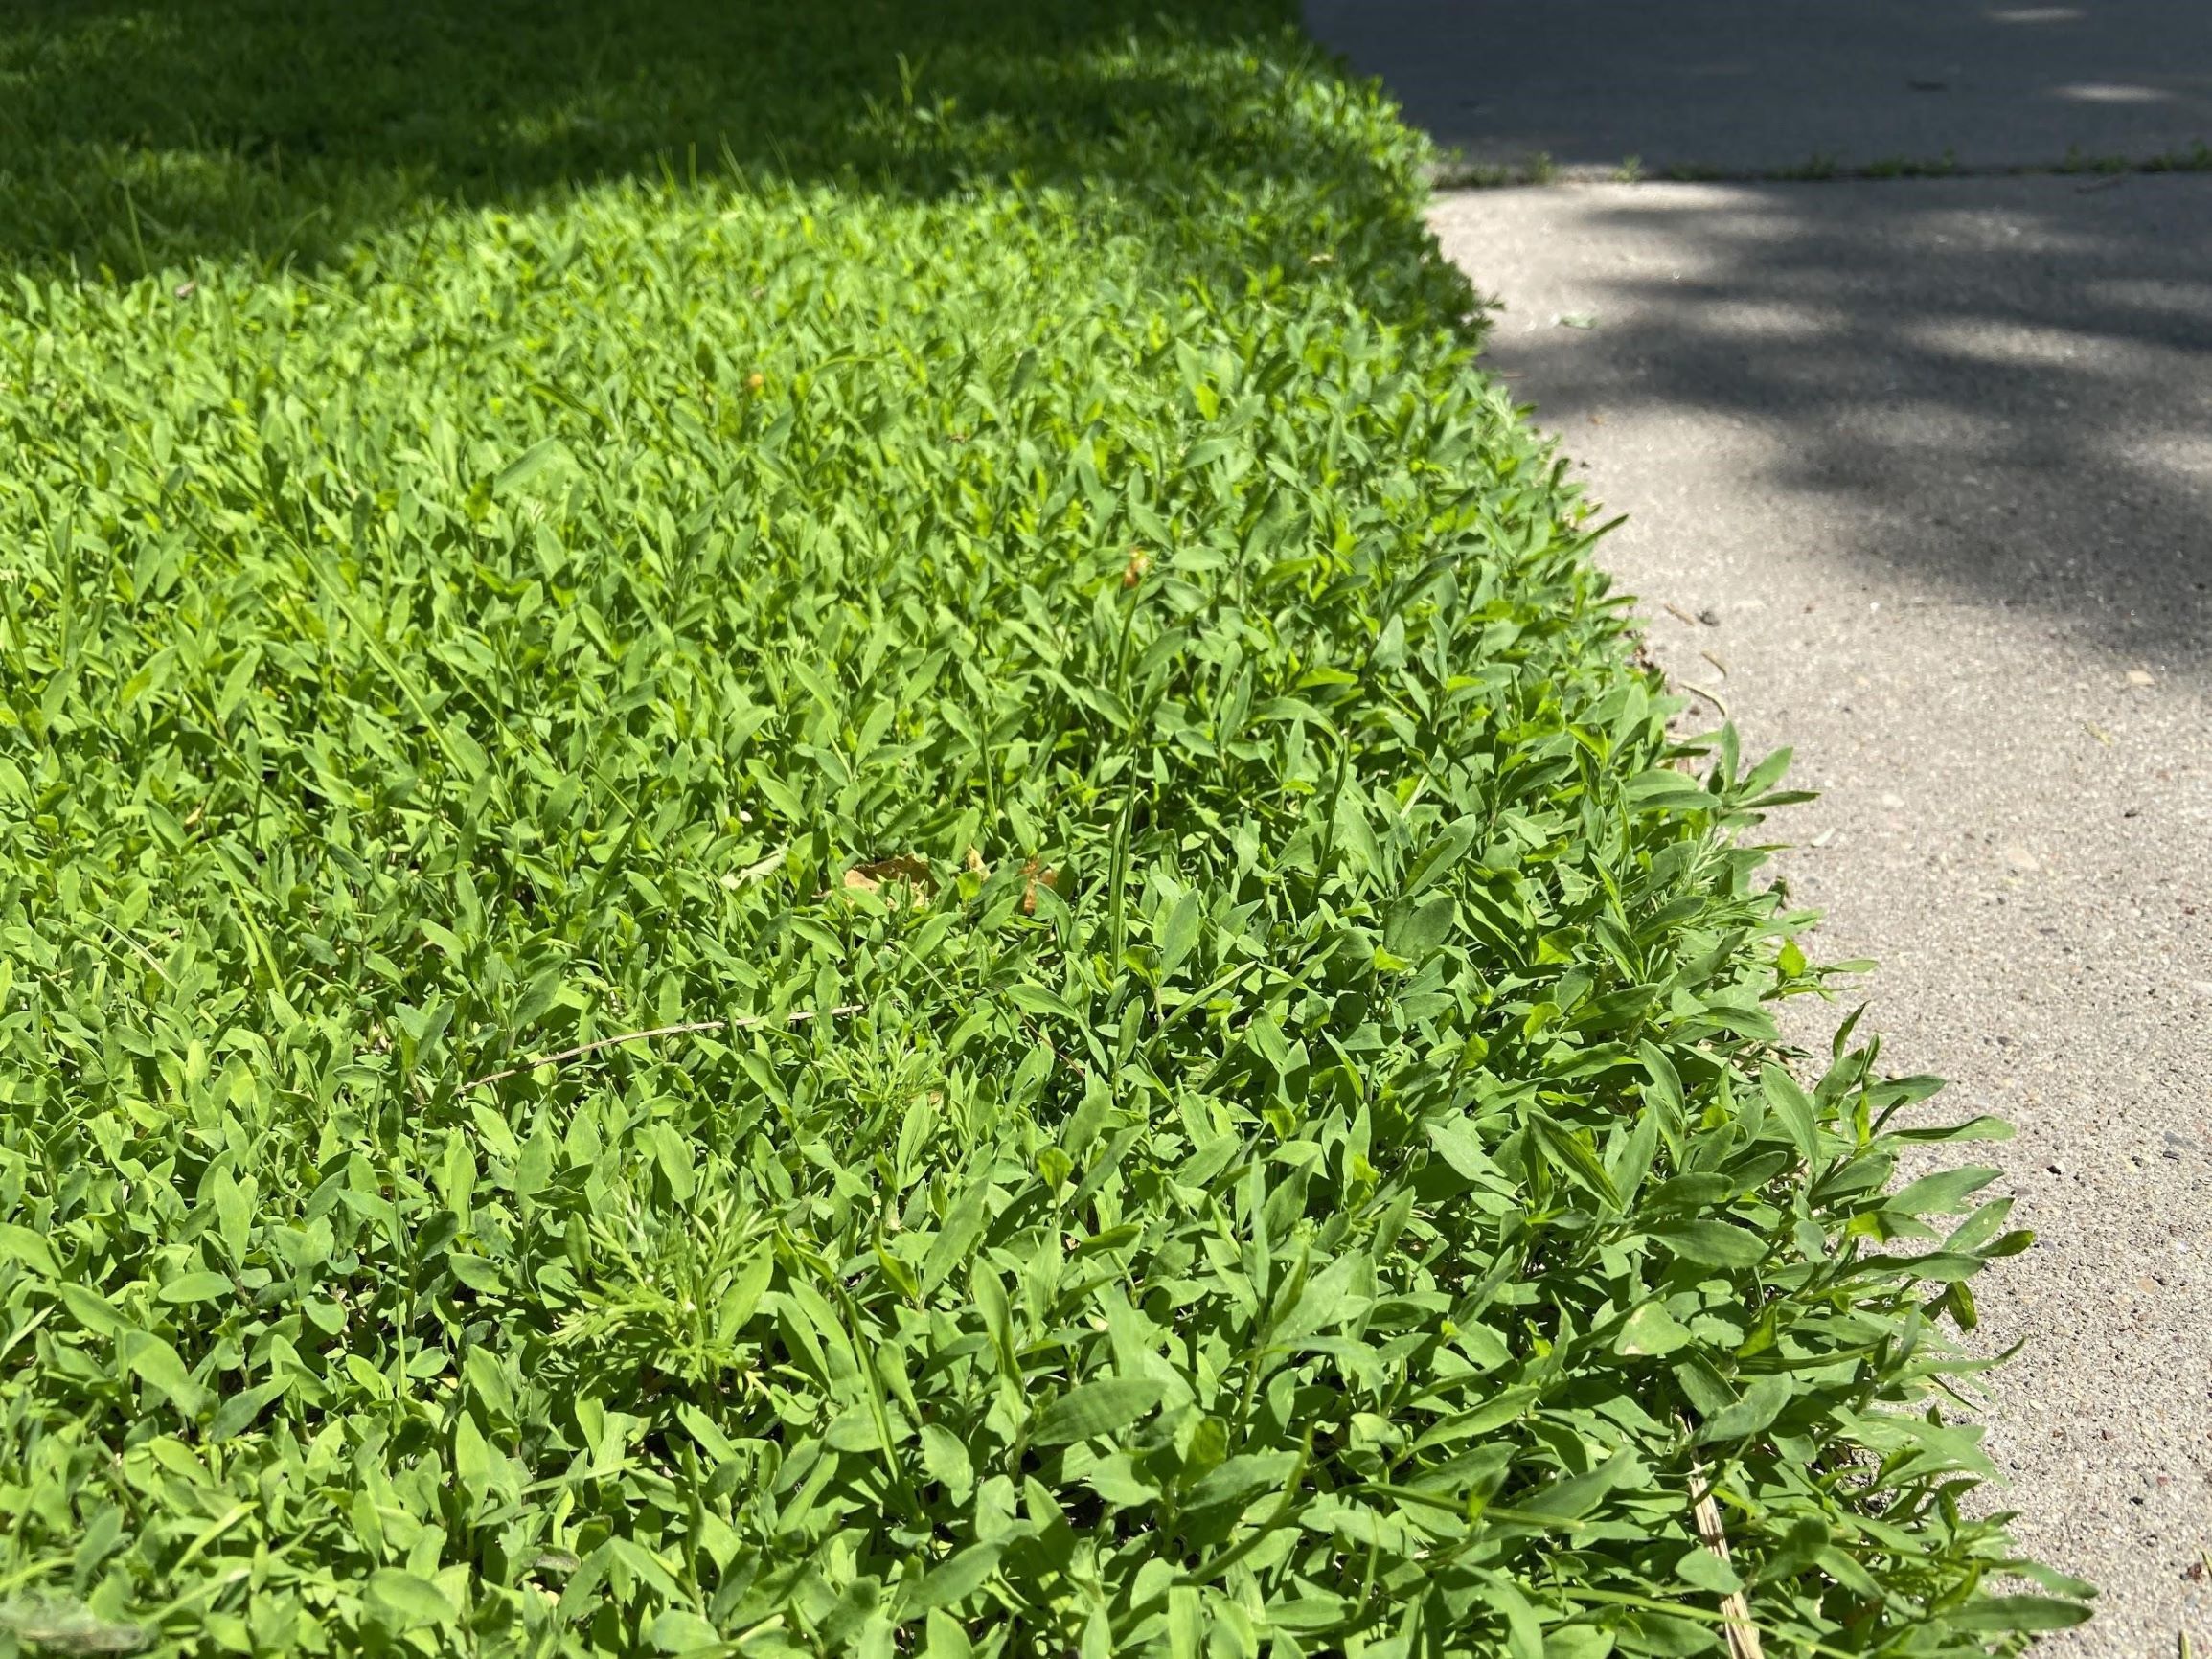 a mass of knotweed plants growing along a sidewalk